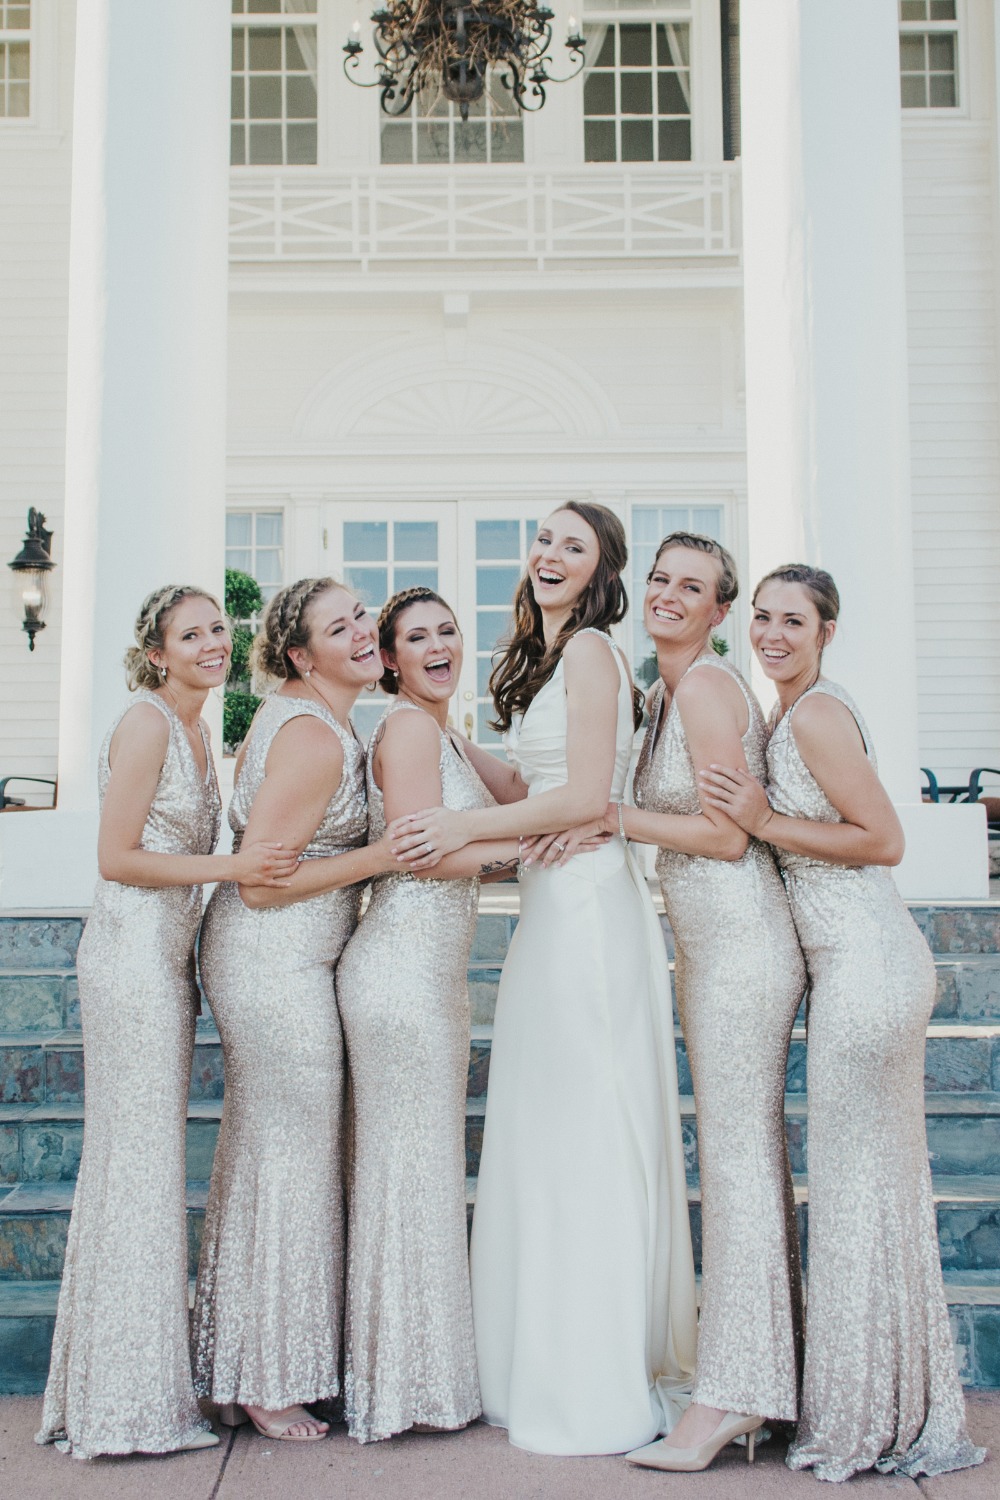 Sparkly gold bridesmaid dresses